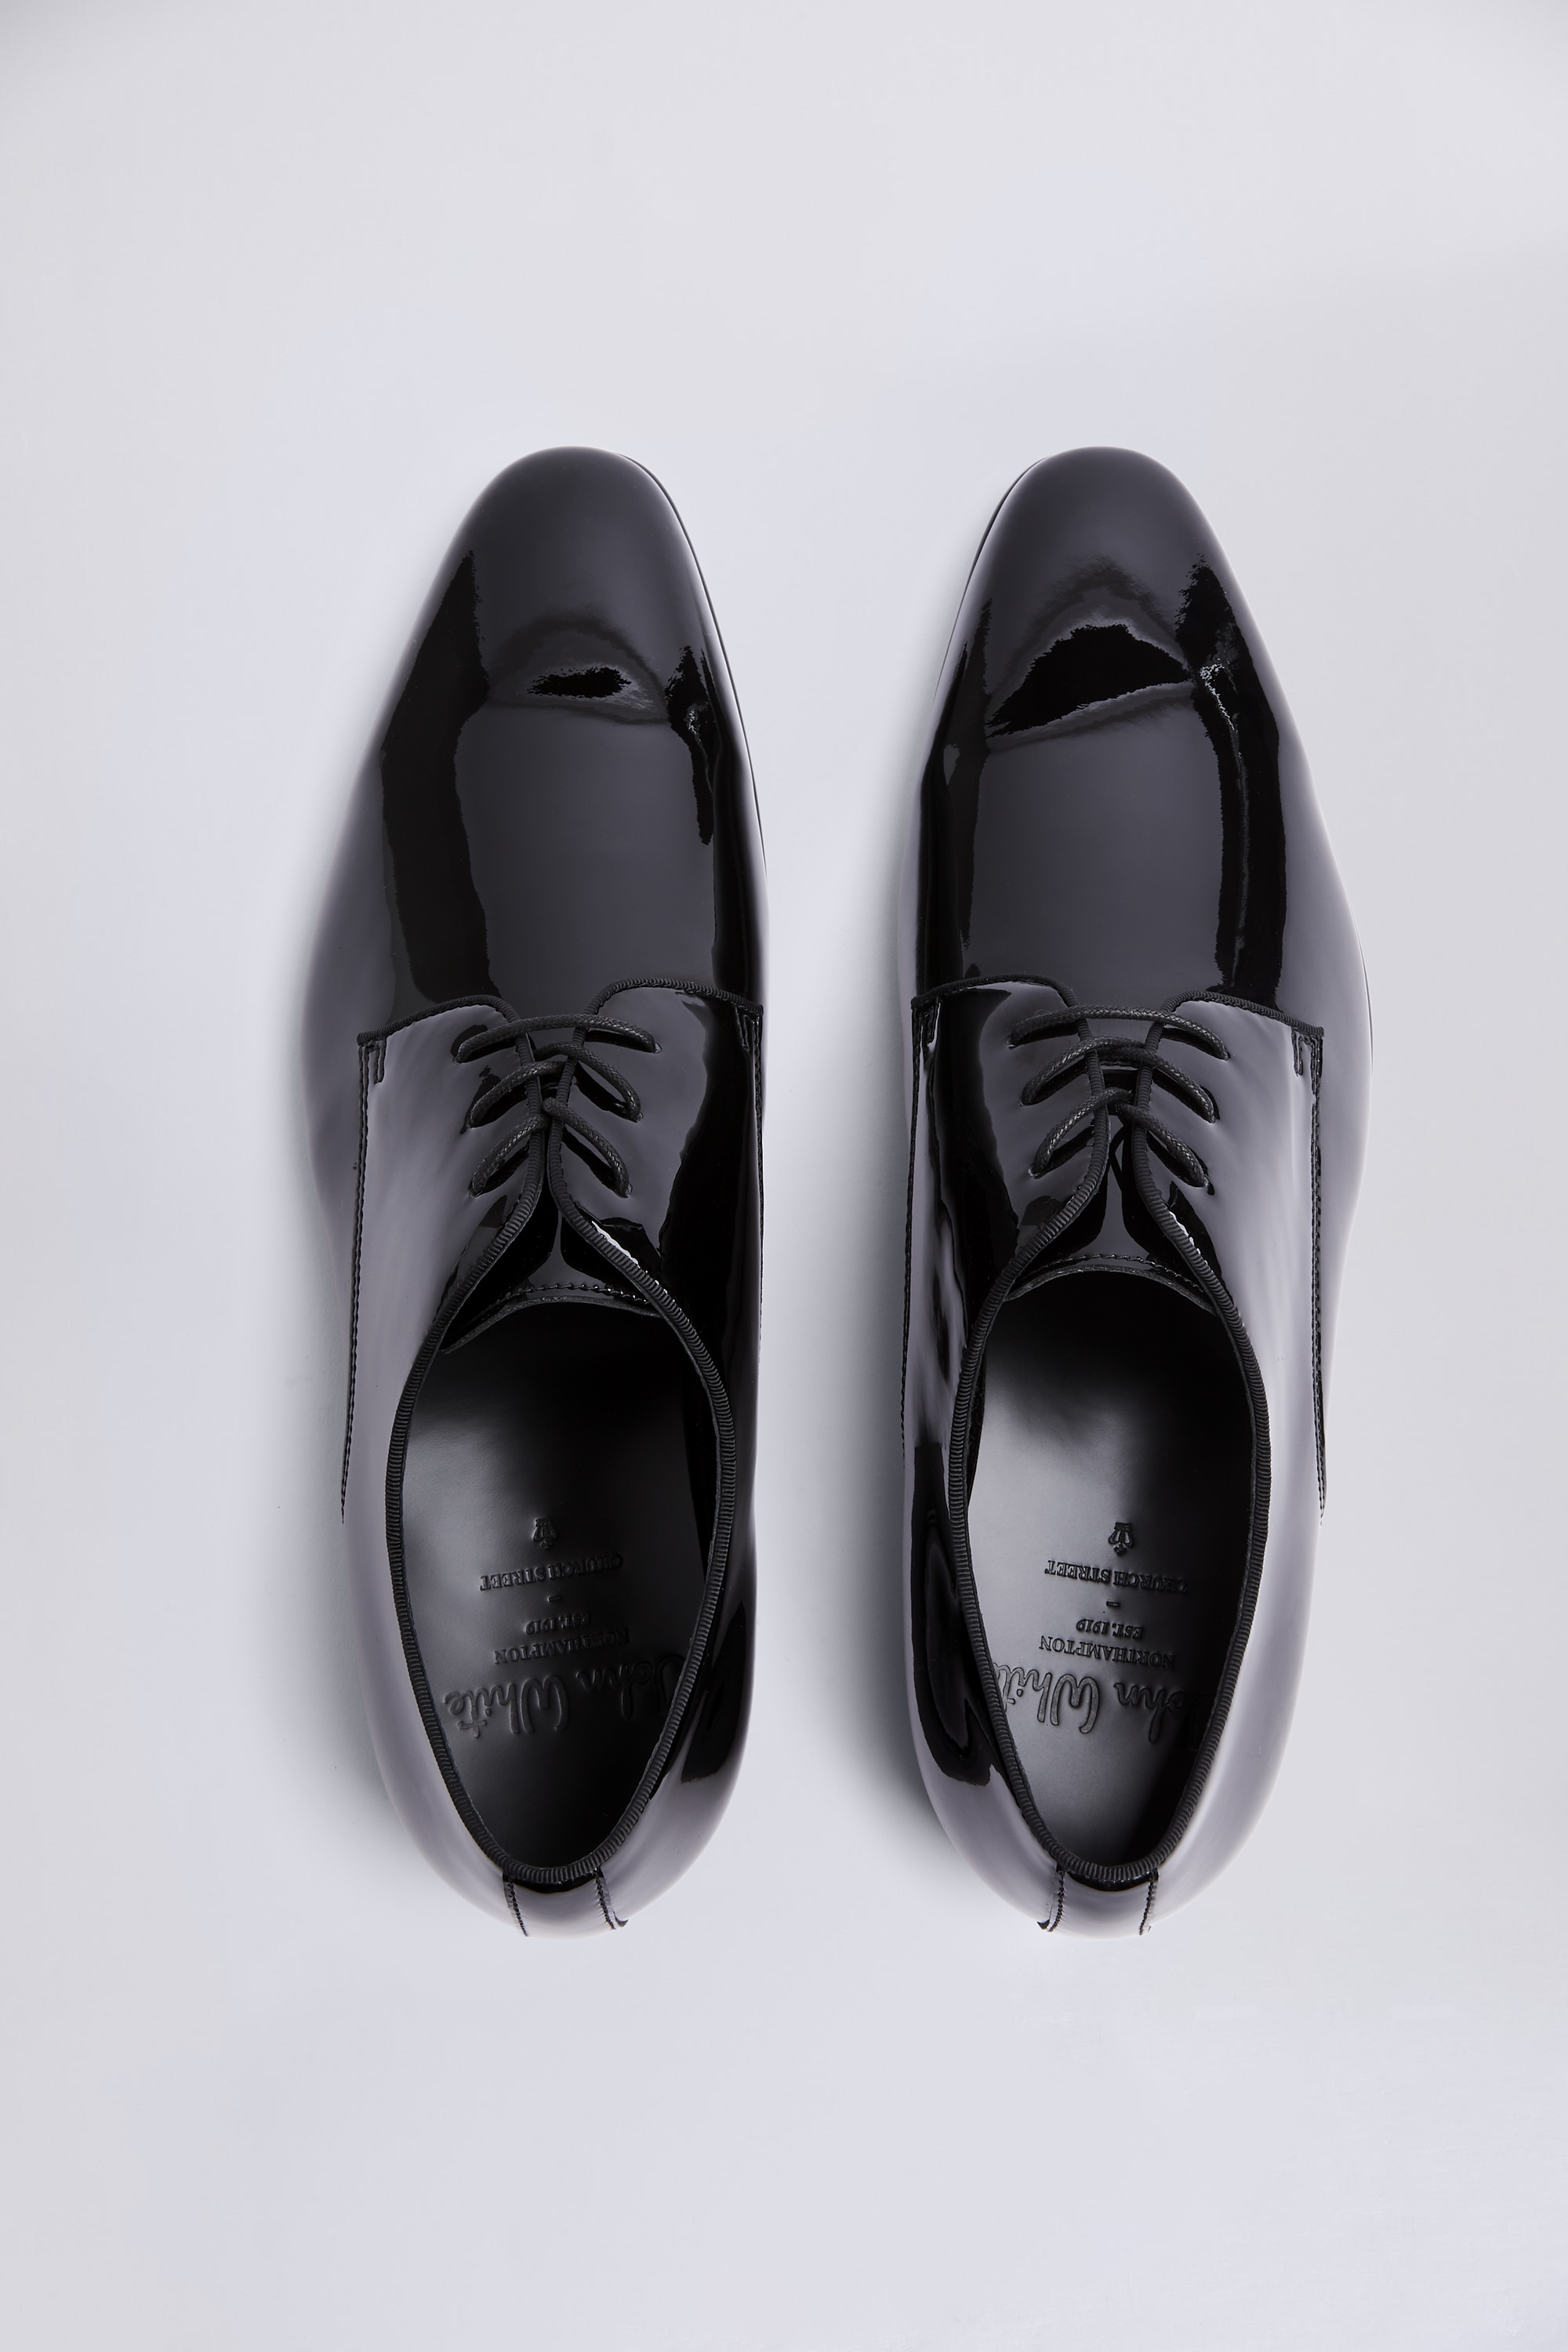 John White Ivy Black Patent Dress Shoes | Buy Online at Moss